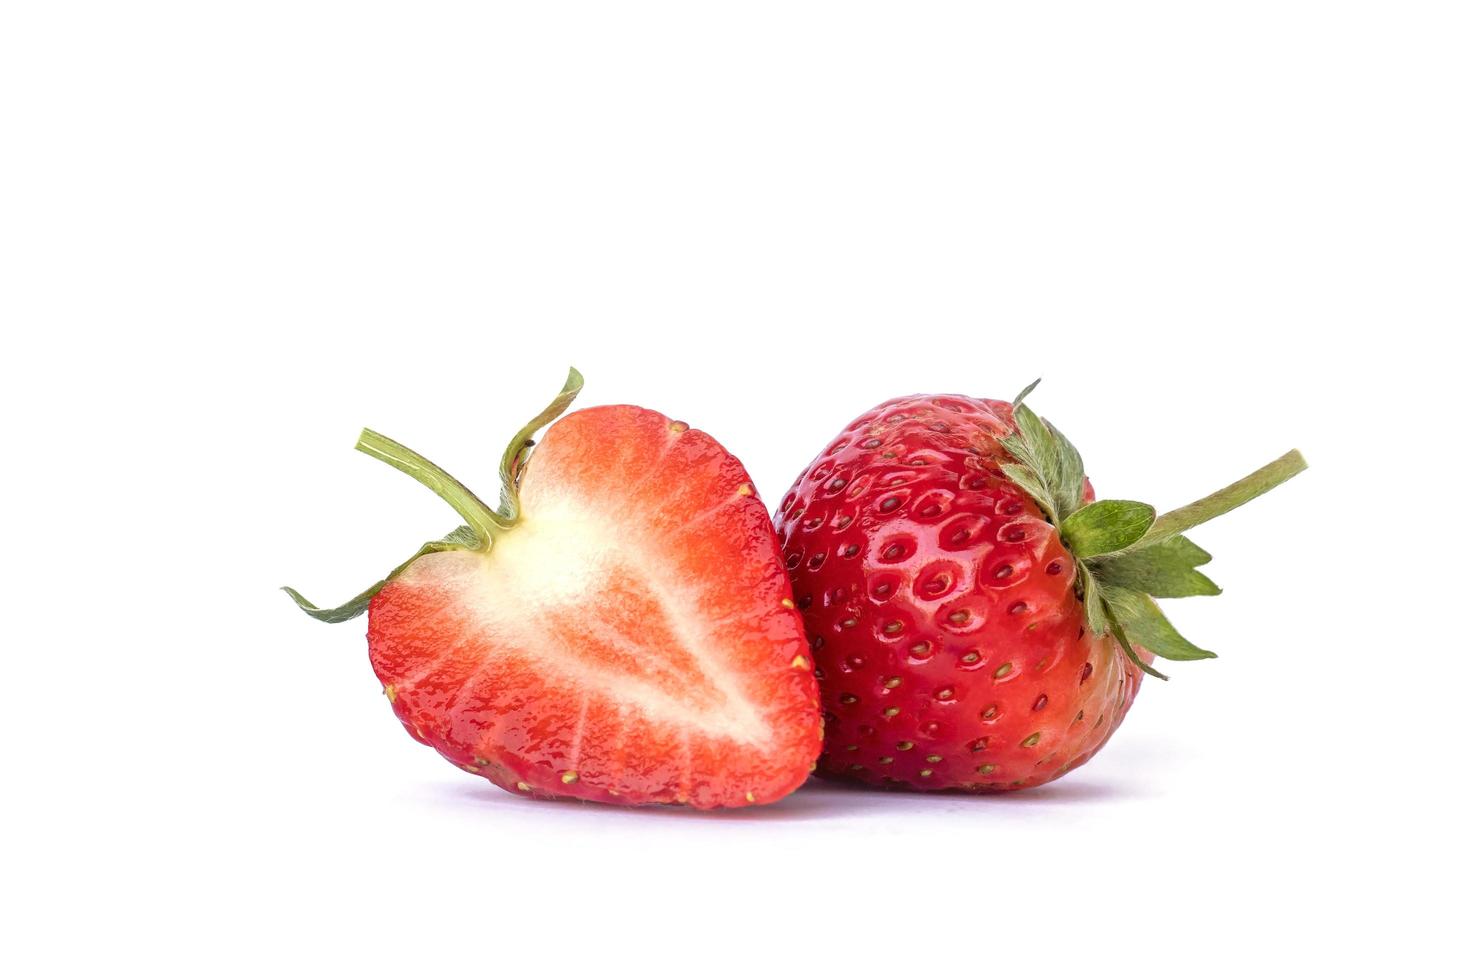 färsk mogen saftig jordgubbe som isoleras på en vit bakgrund foto